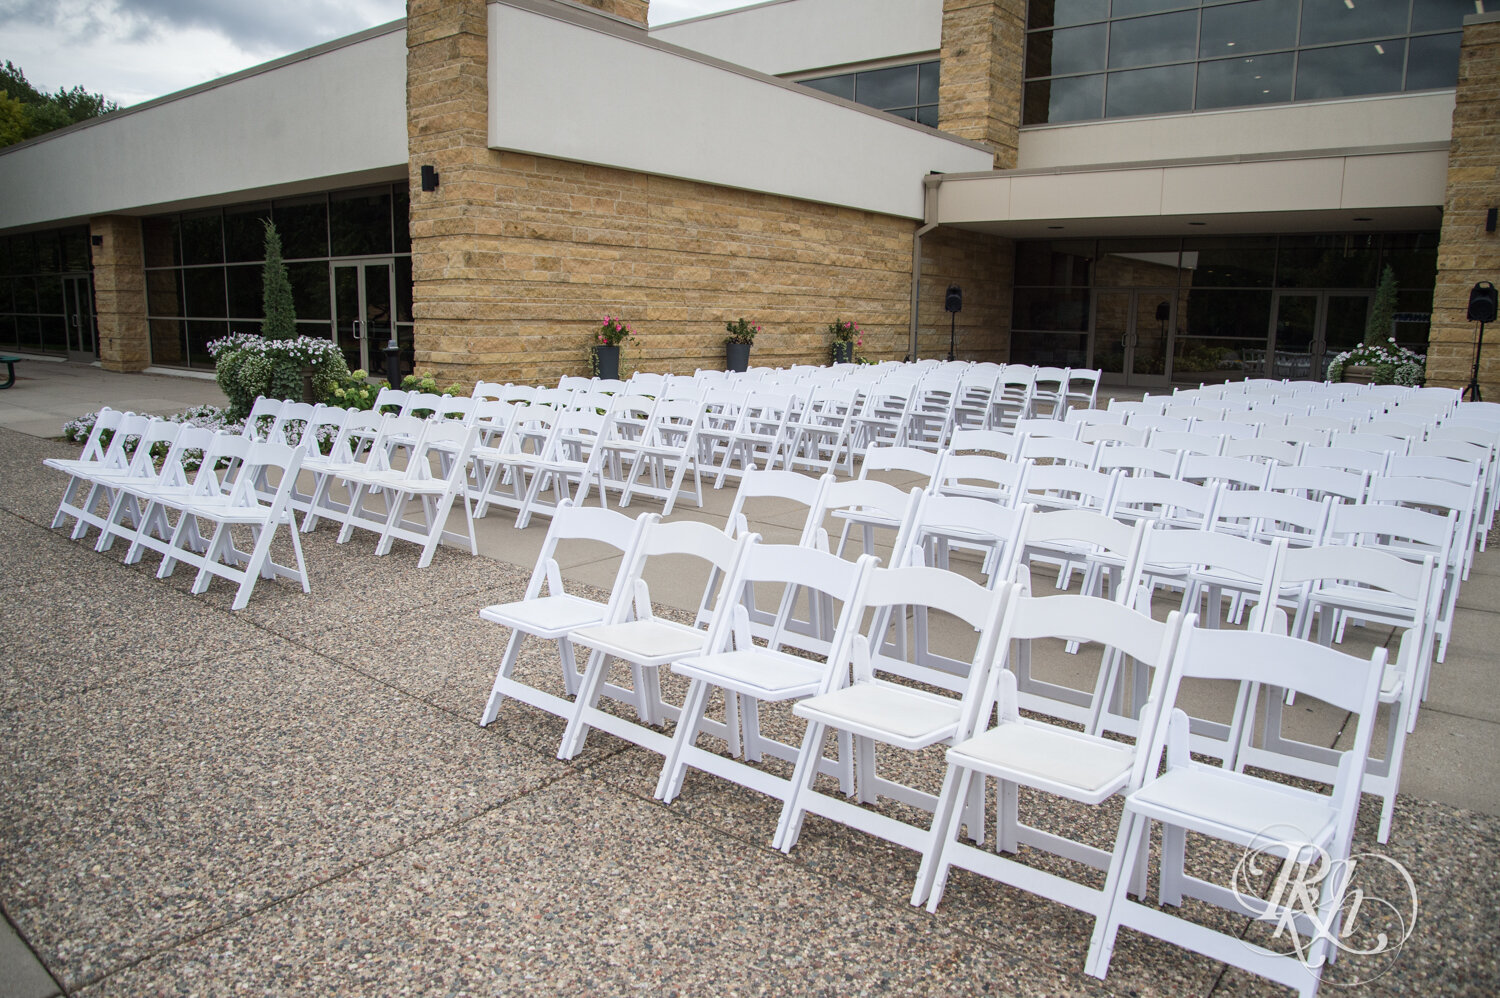 Outdoor wedding ceremony setup at Eagan Community Center in Eagan, Minnesota.